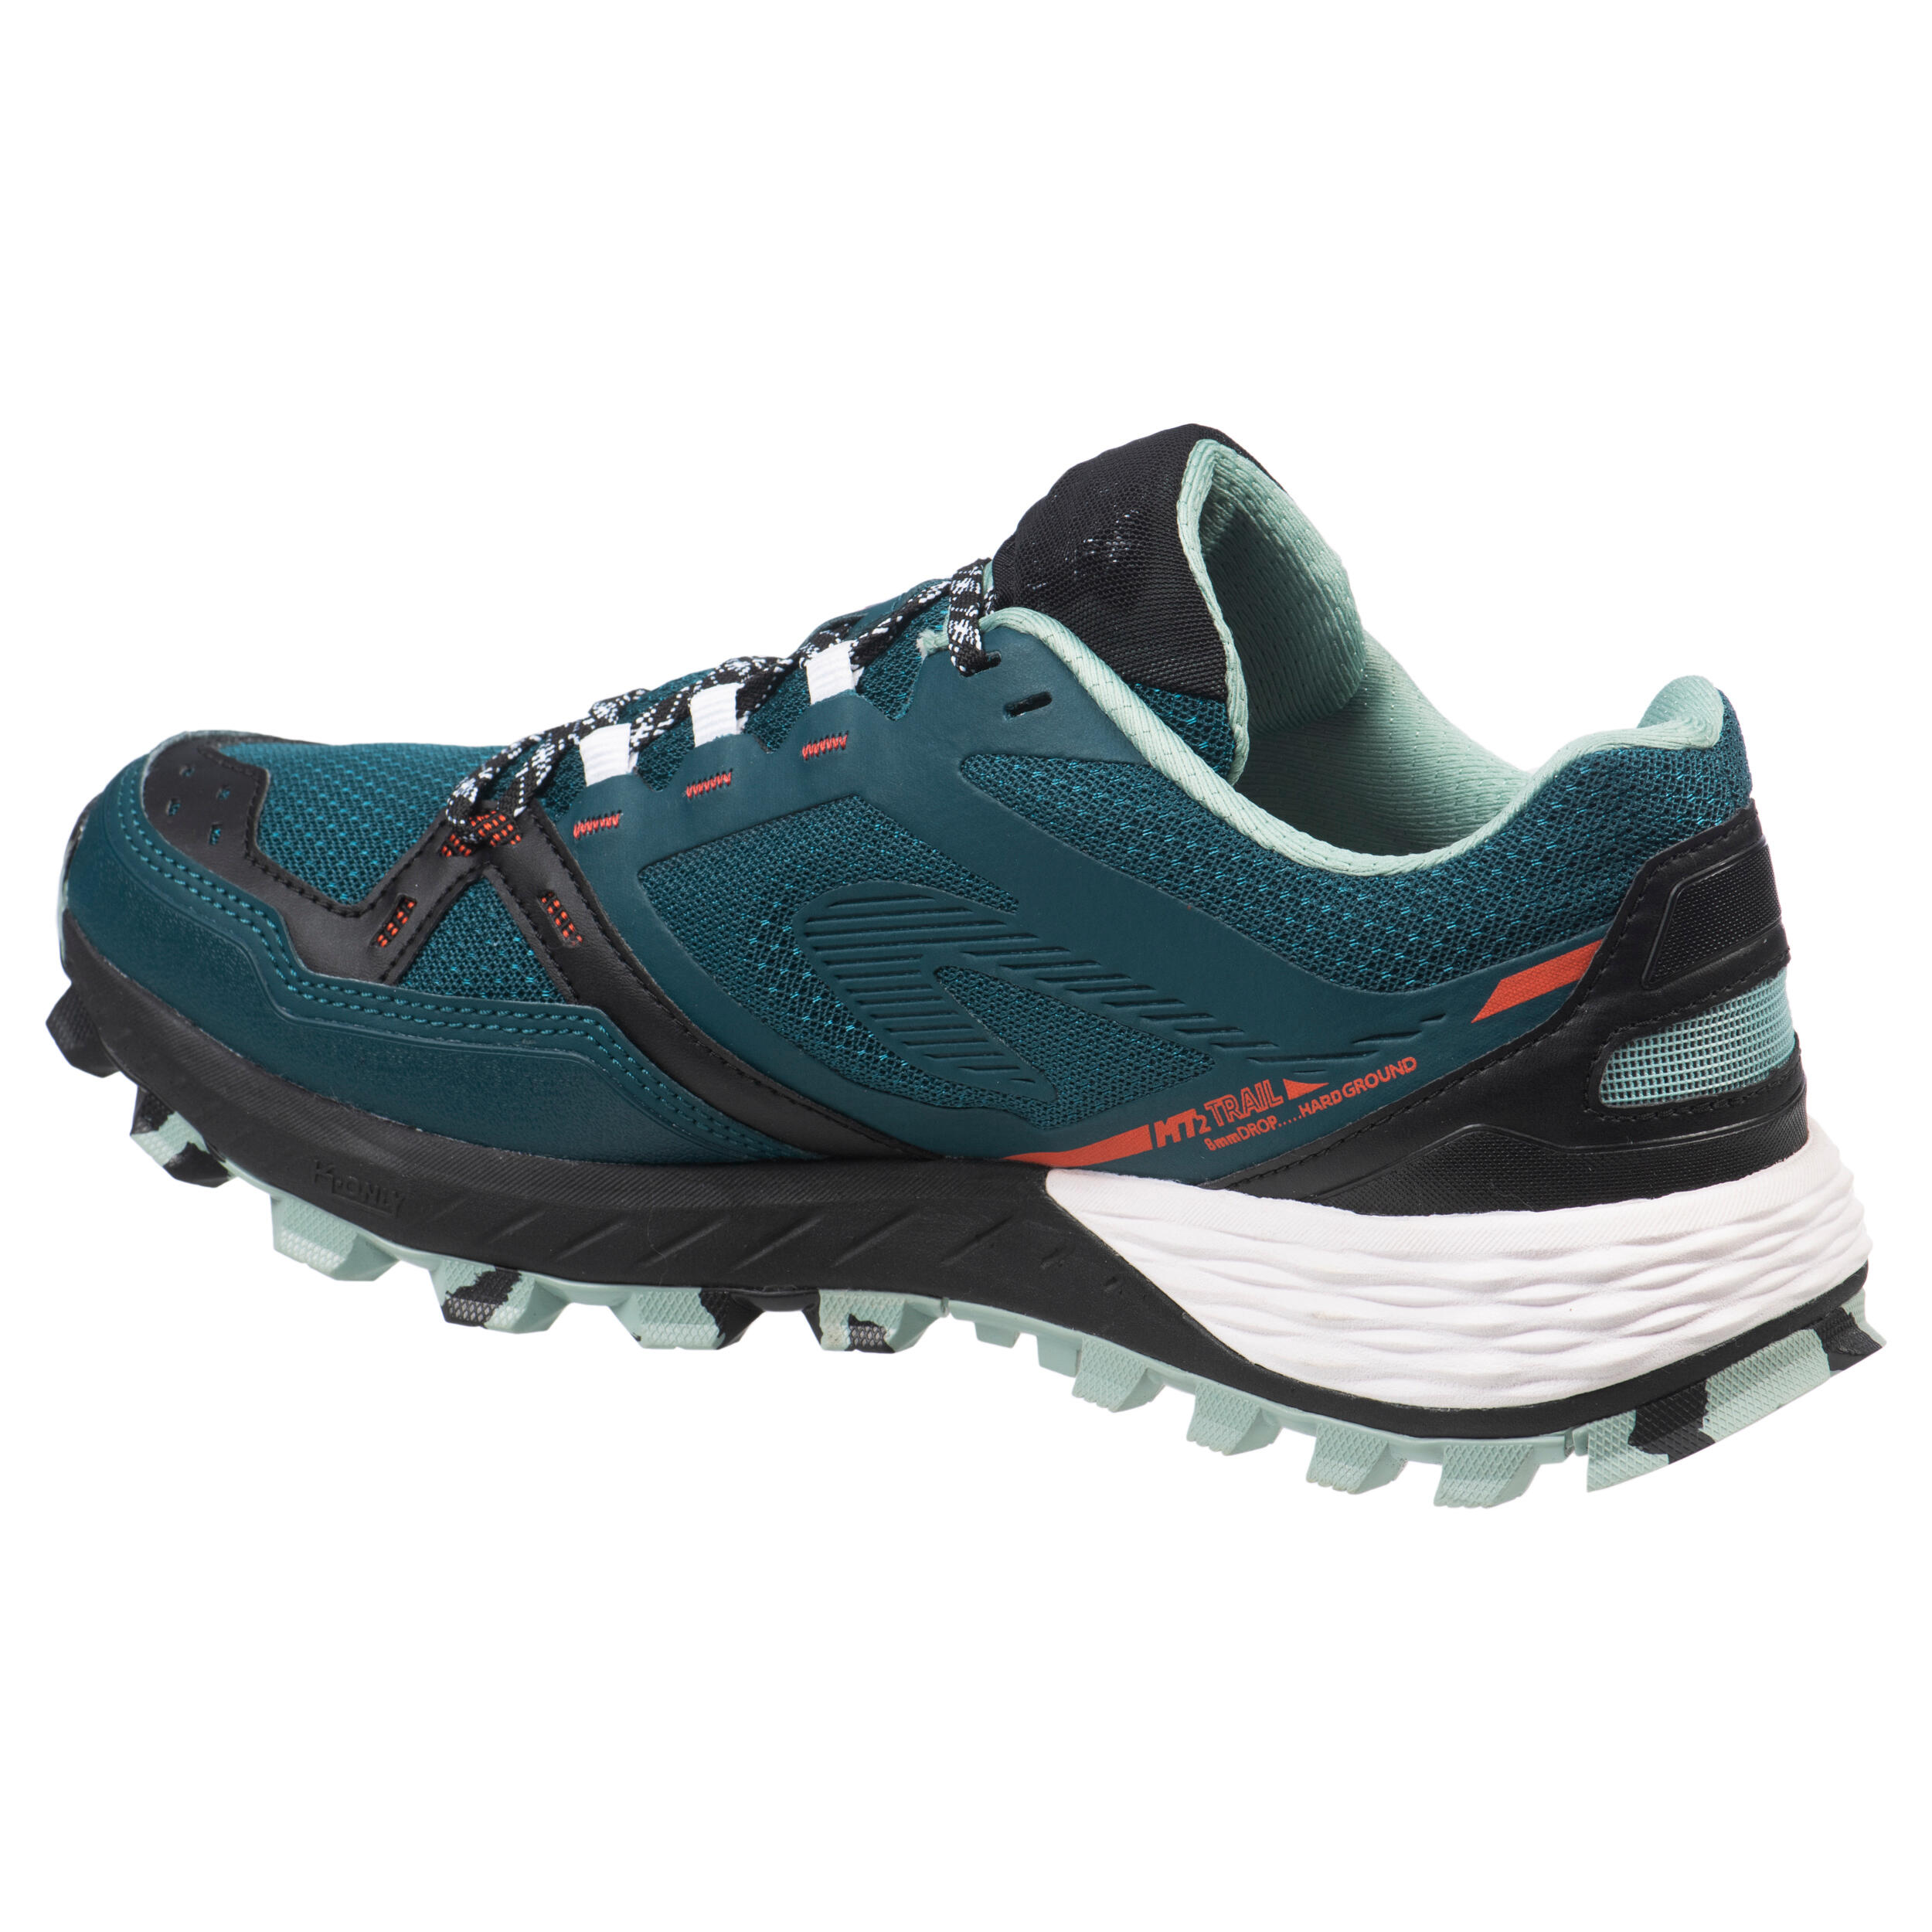 Men's Trail Running Shoes - MT 2 - Dark petrol blue, Verdigris, Bright ...